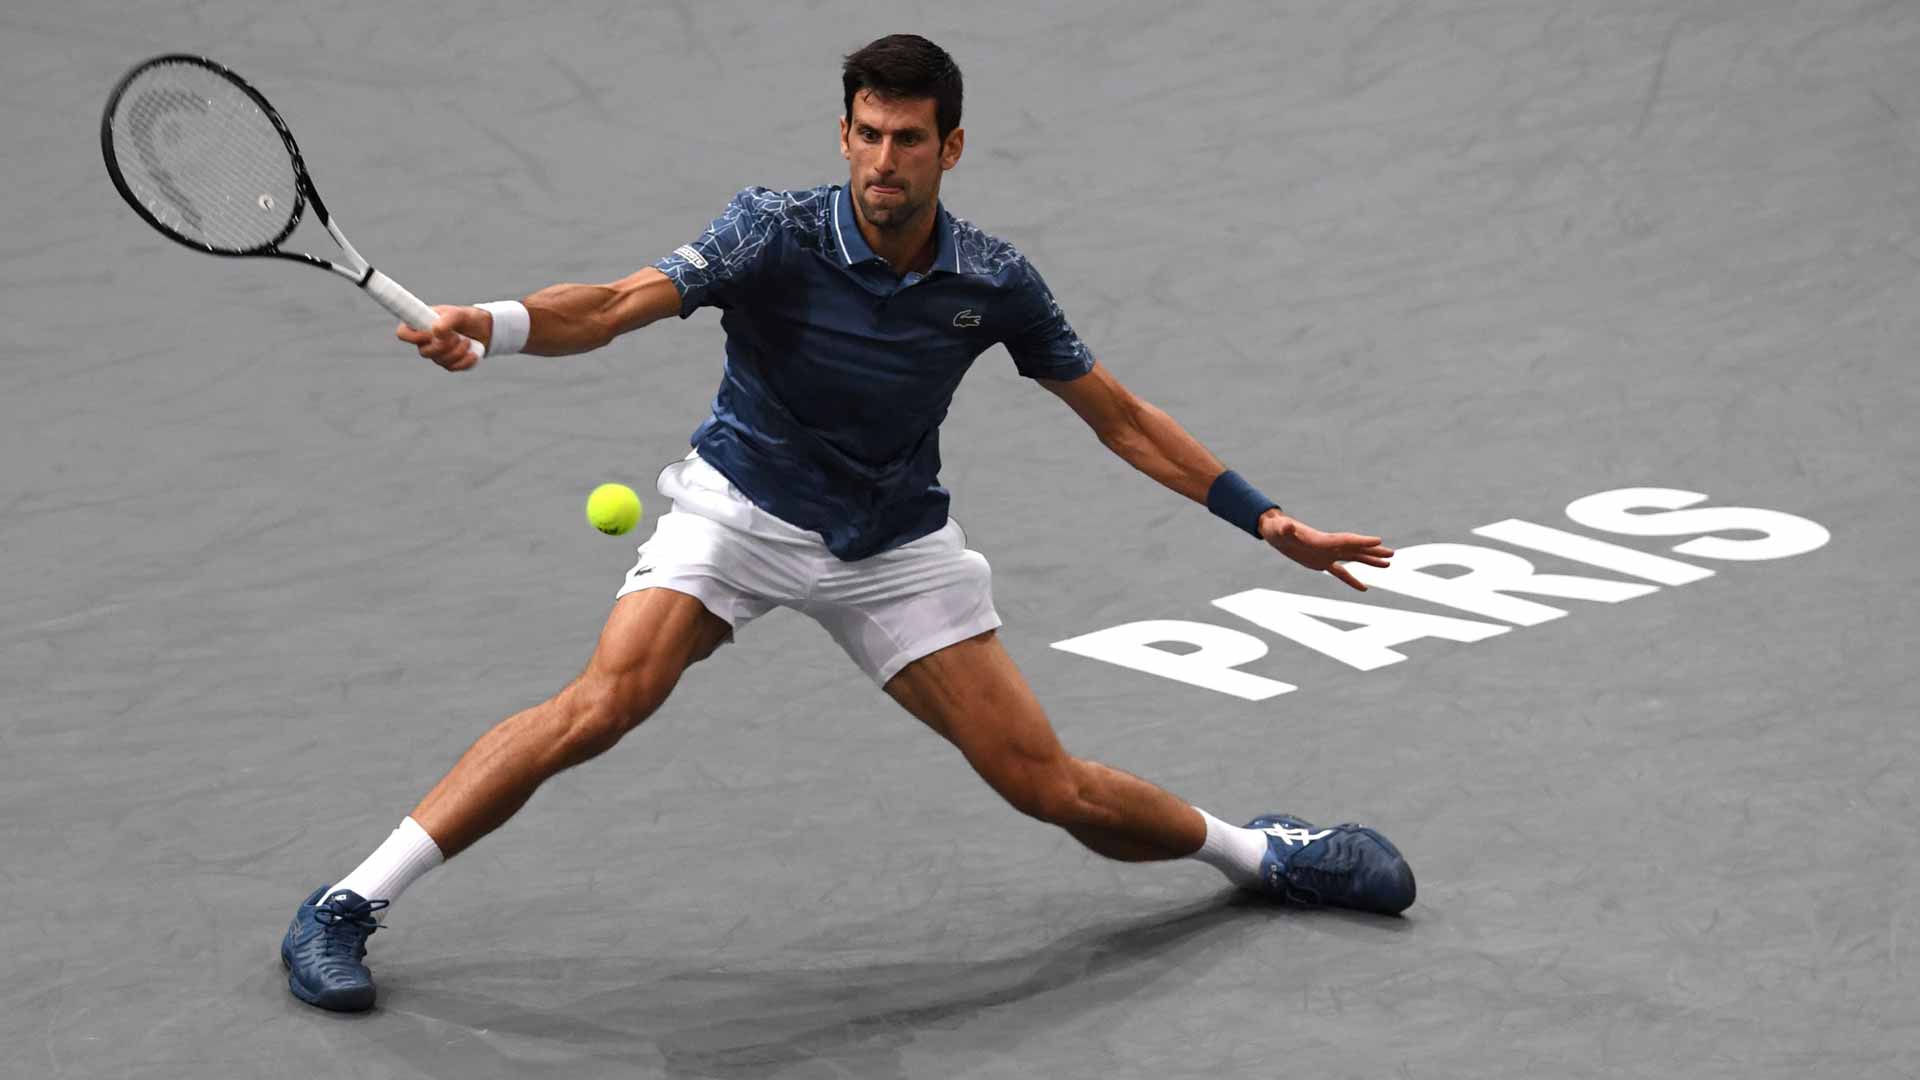 forbruge Ydmyge Kvalifikation Novak Djokovic Edges Roger Federer In 2018 Paris Thriller: "Ranks As One Of  The Best Matches We Played" | ATP Tour | Tennis